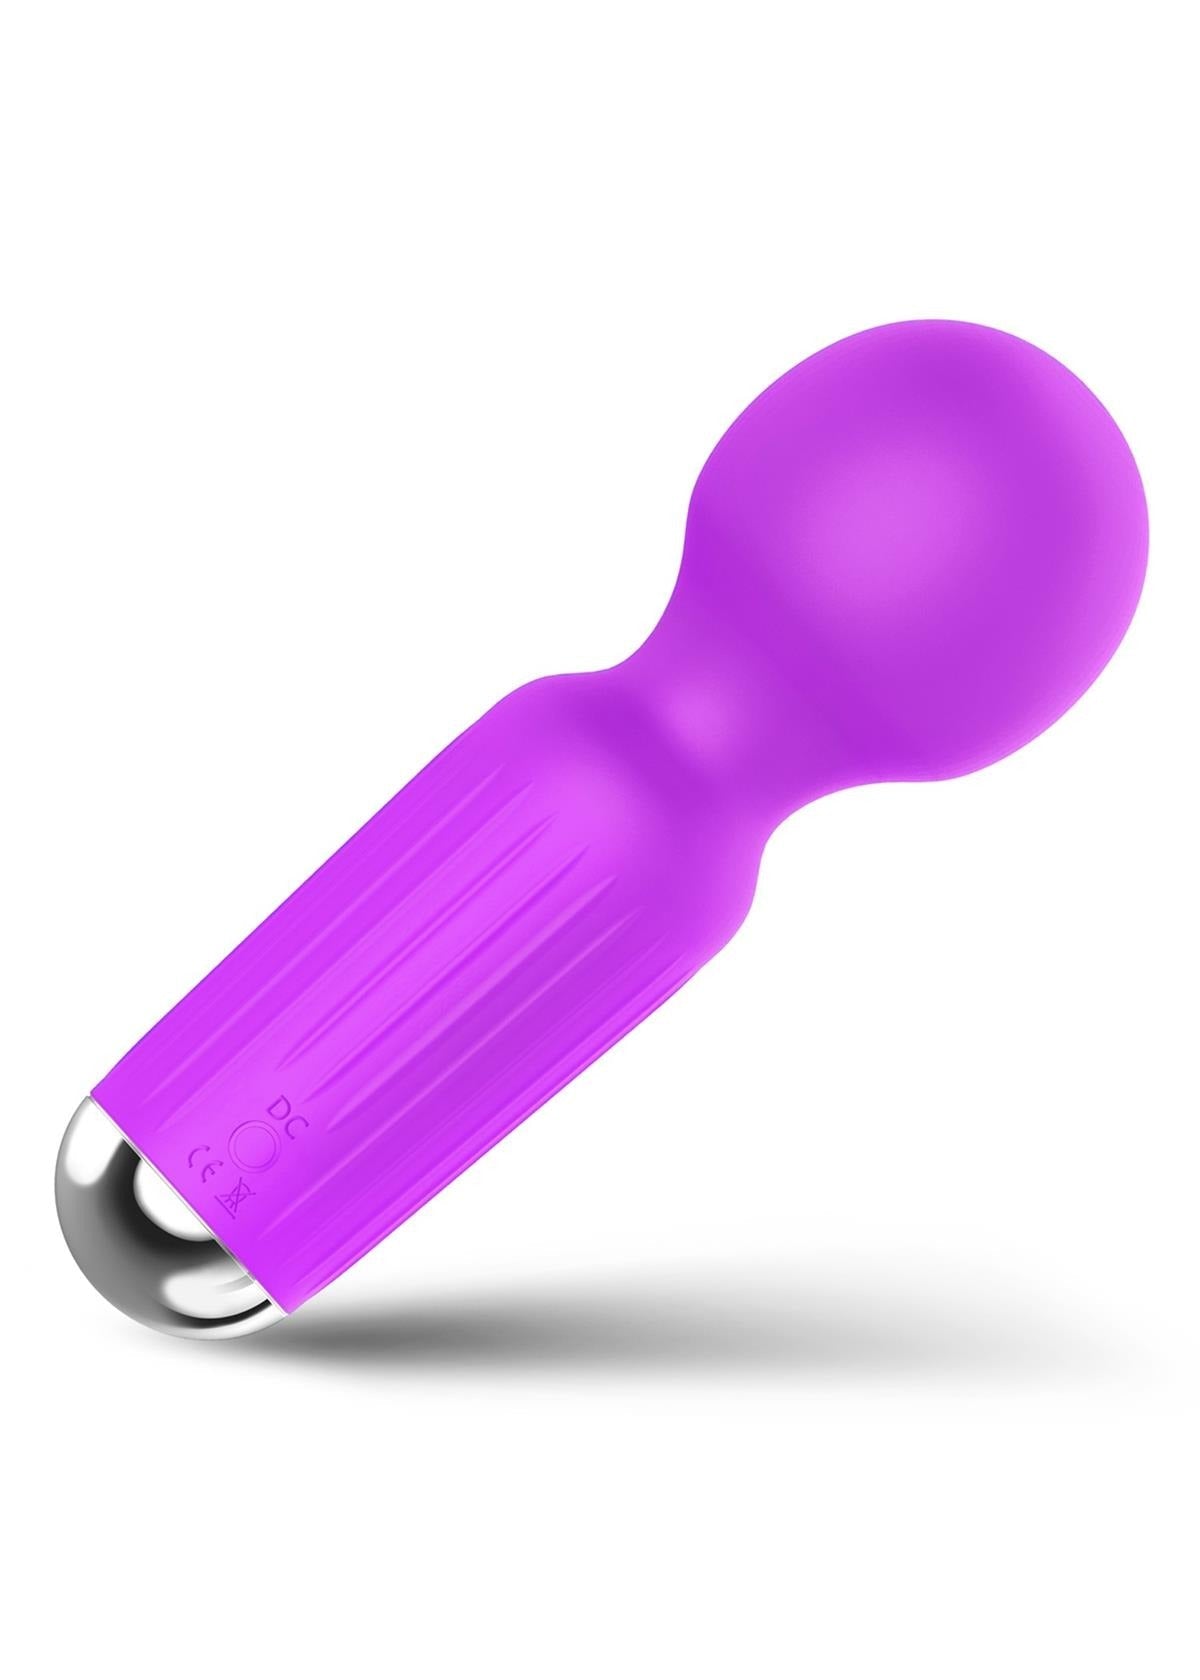 Bossoftoys - 22-00040 - Mini Massager vibrator - 20 Functions - Silicone - 11 cm -  dia 3,7 cm - Rechargeable - attractive Colour windowbox - Purple